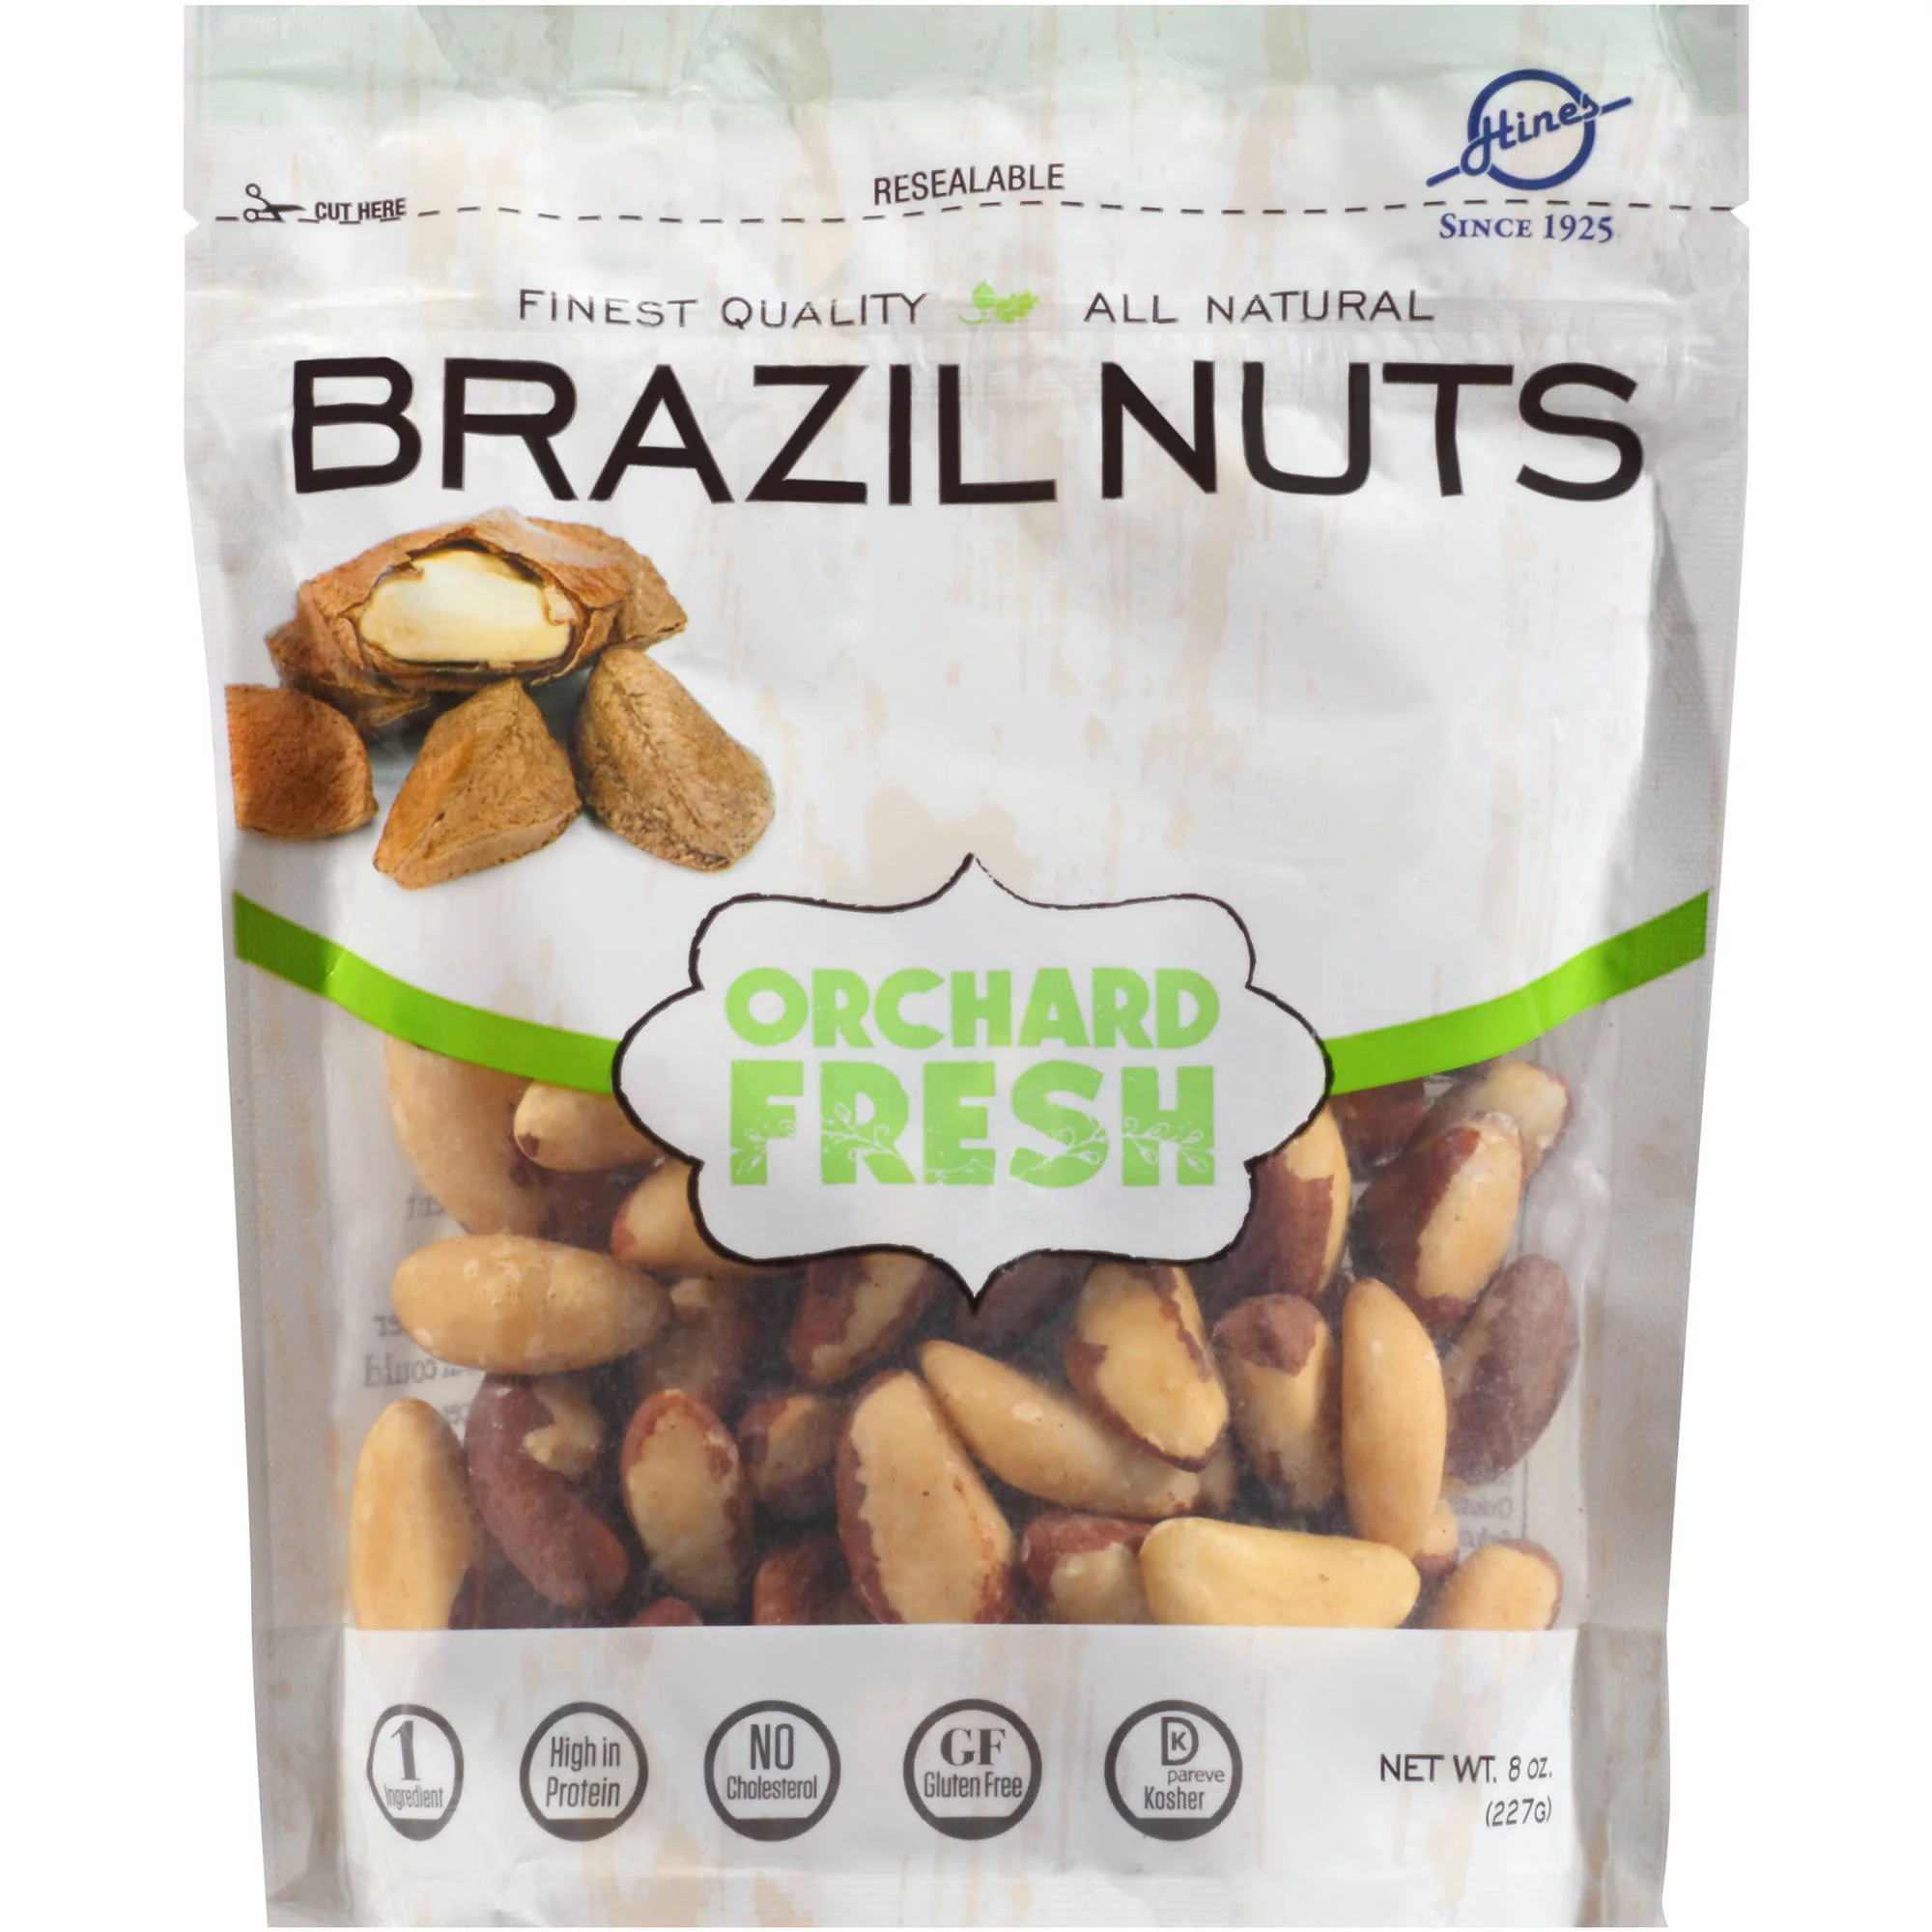 planters brazil nuts